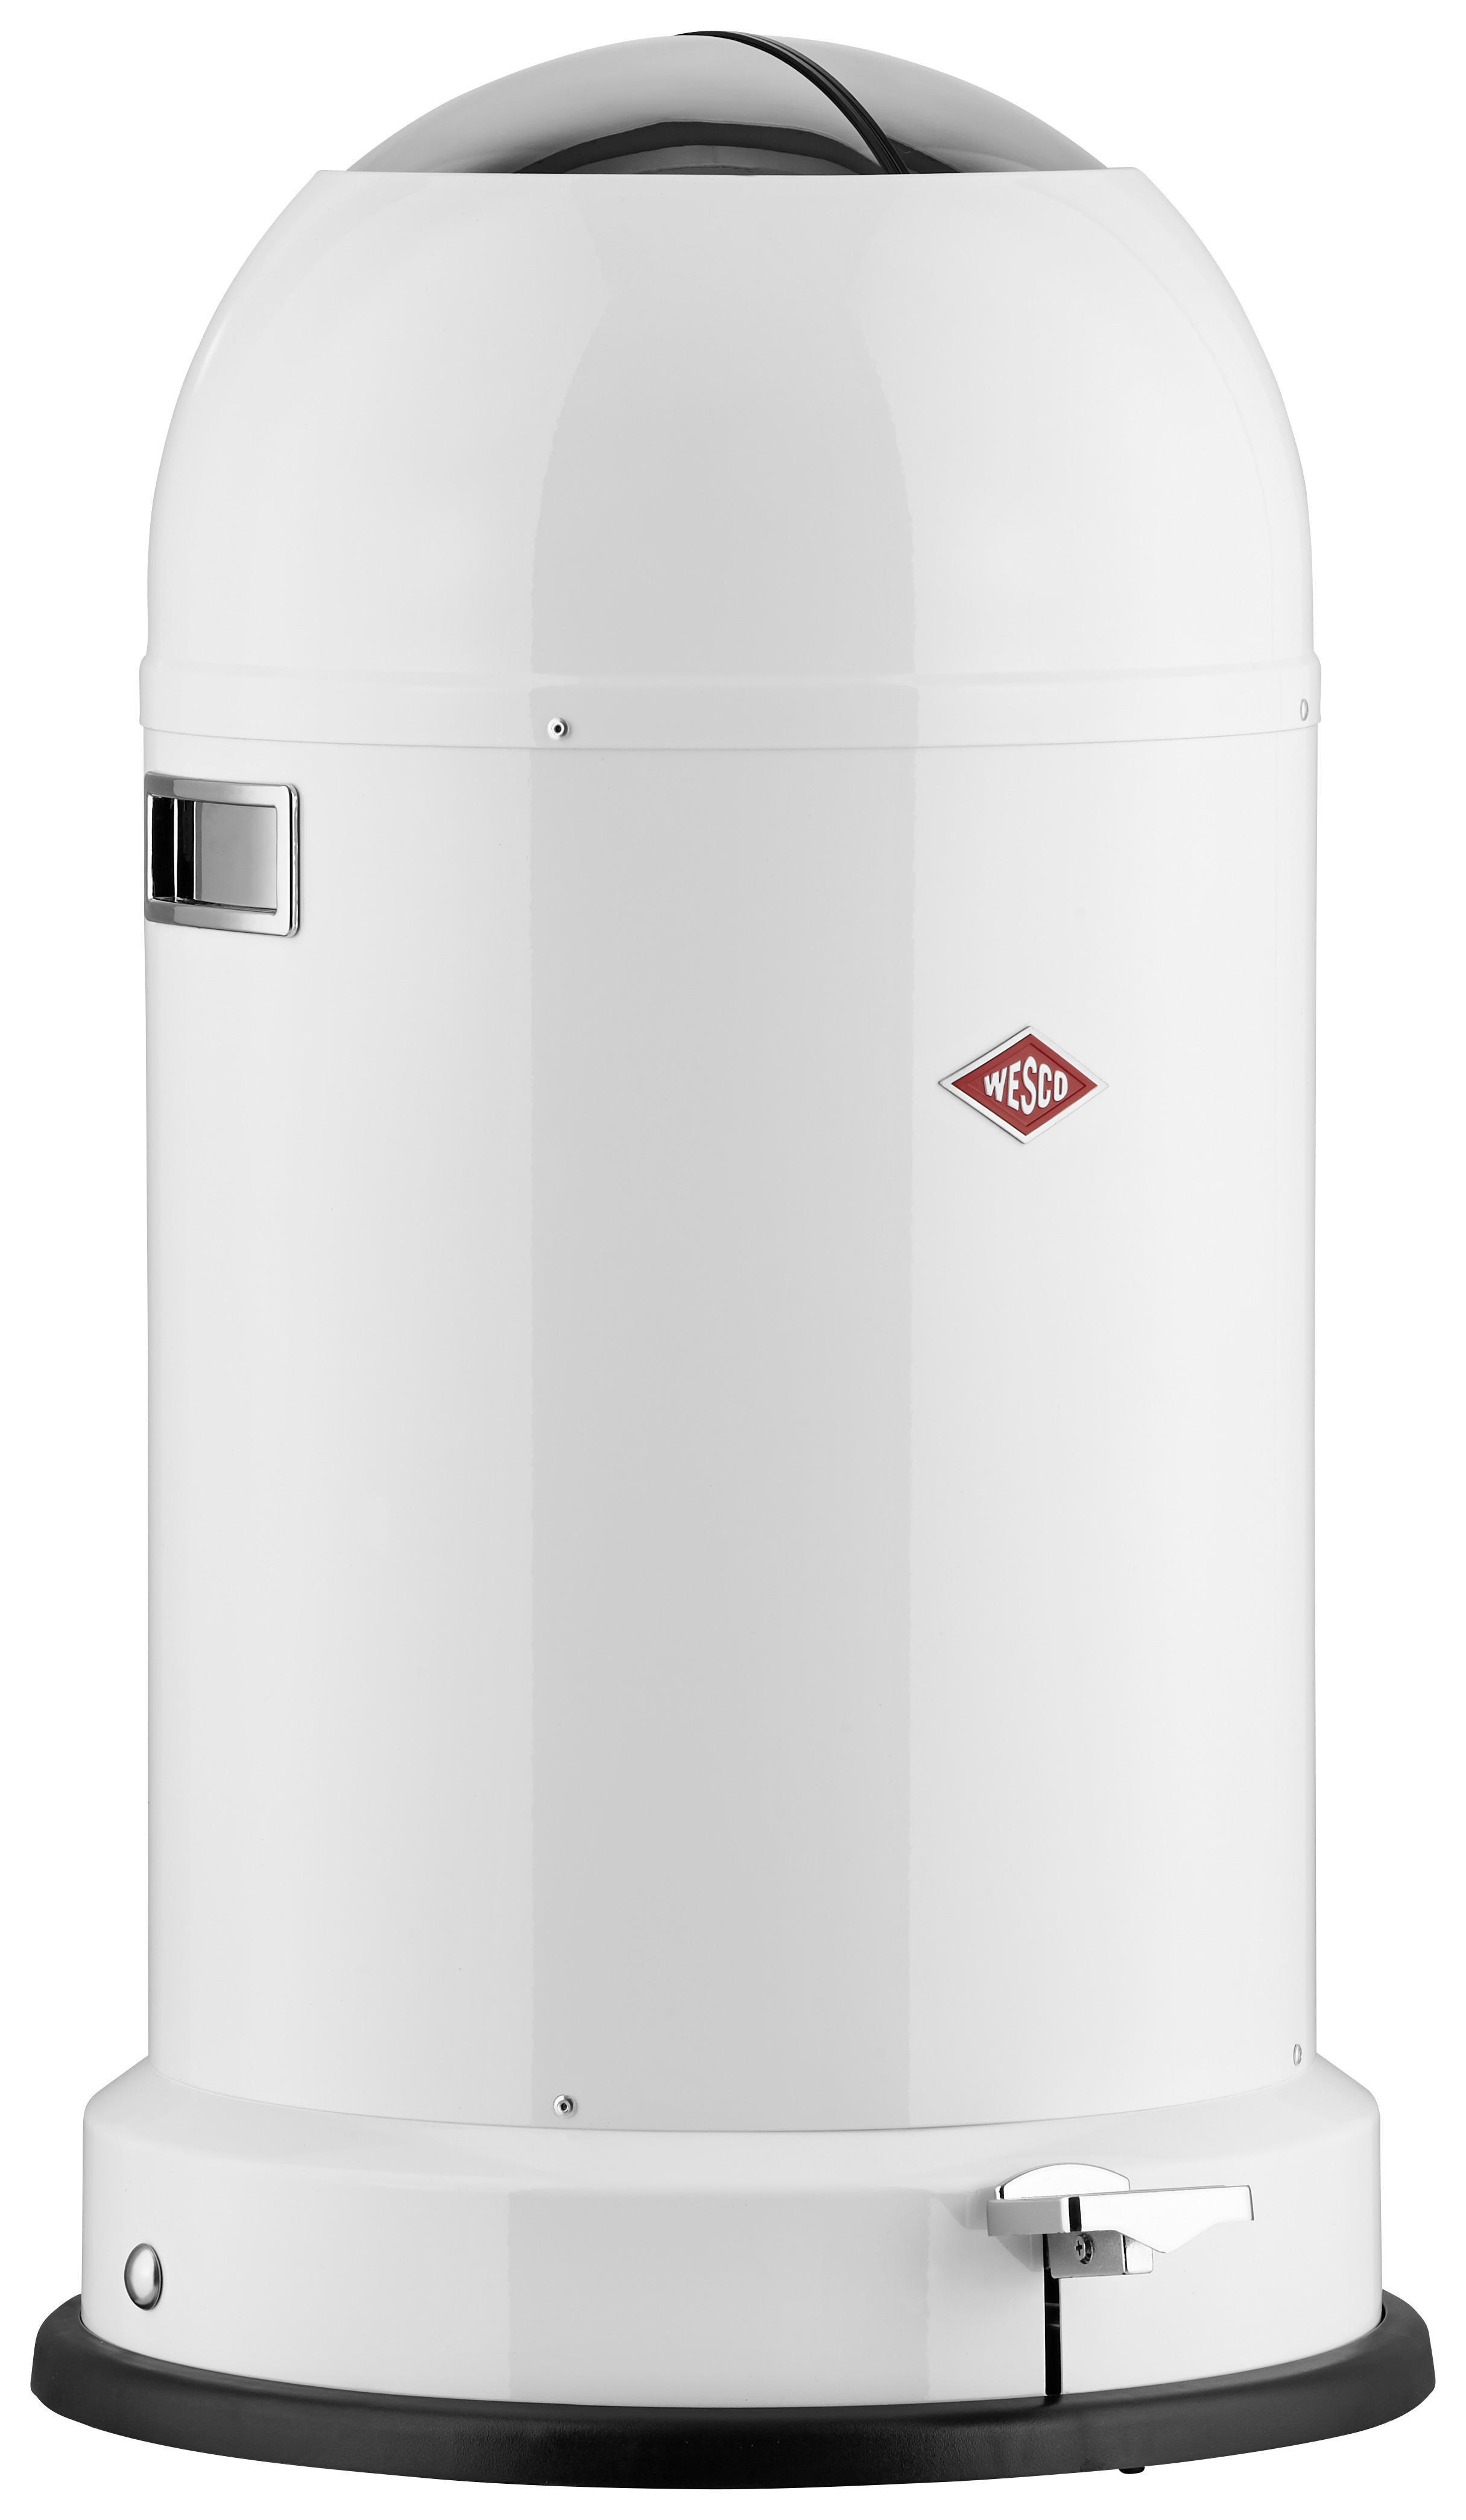 ABFALLSAMMLER KICKMASTER 33 L  - Schwarz/Weiß, Basics, Kunststoff/Metall (37,5/69cm) - Wesco